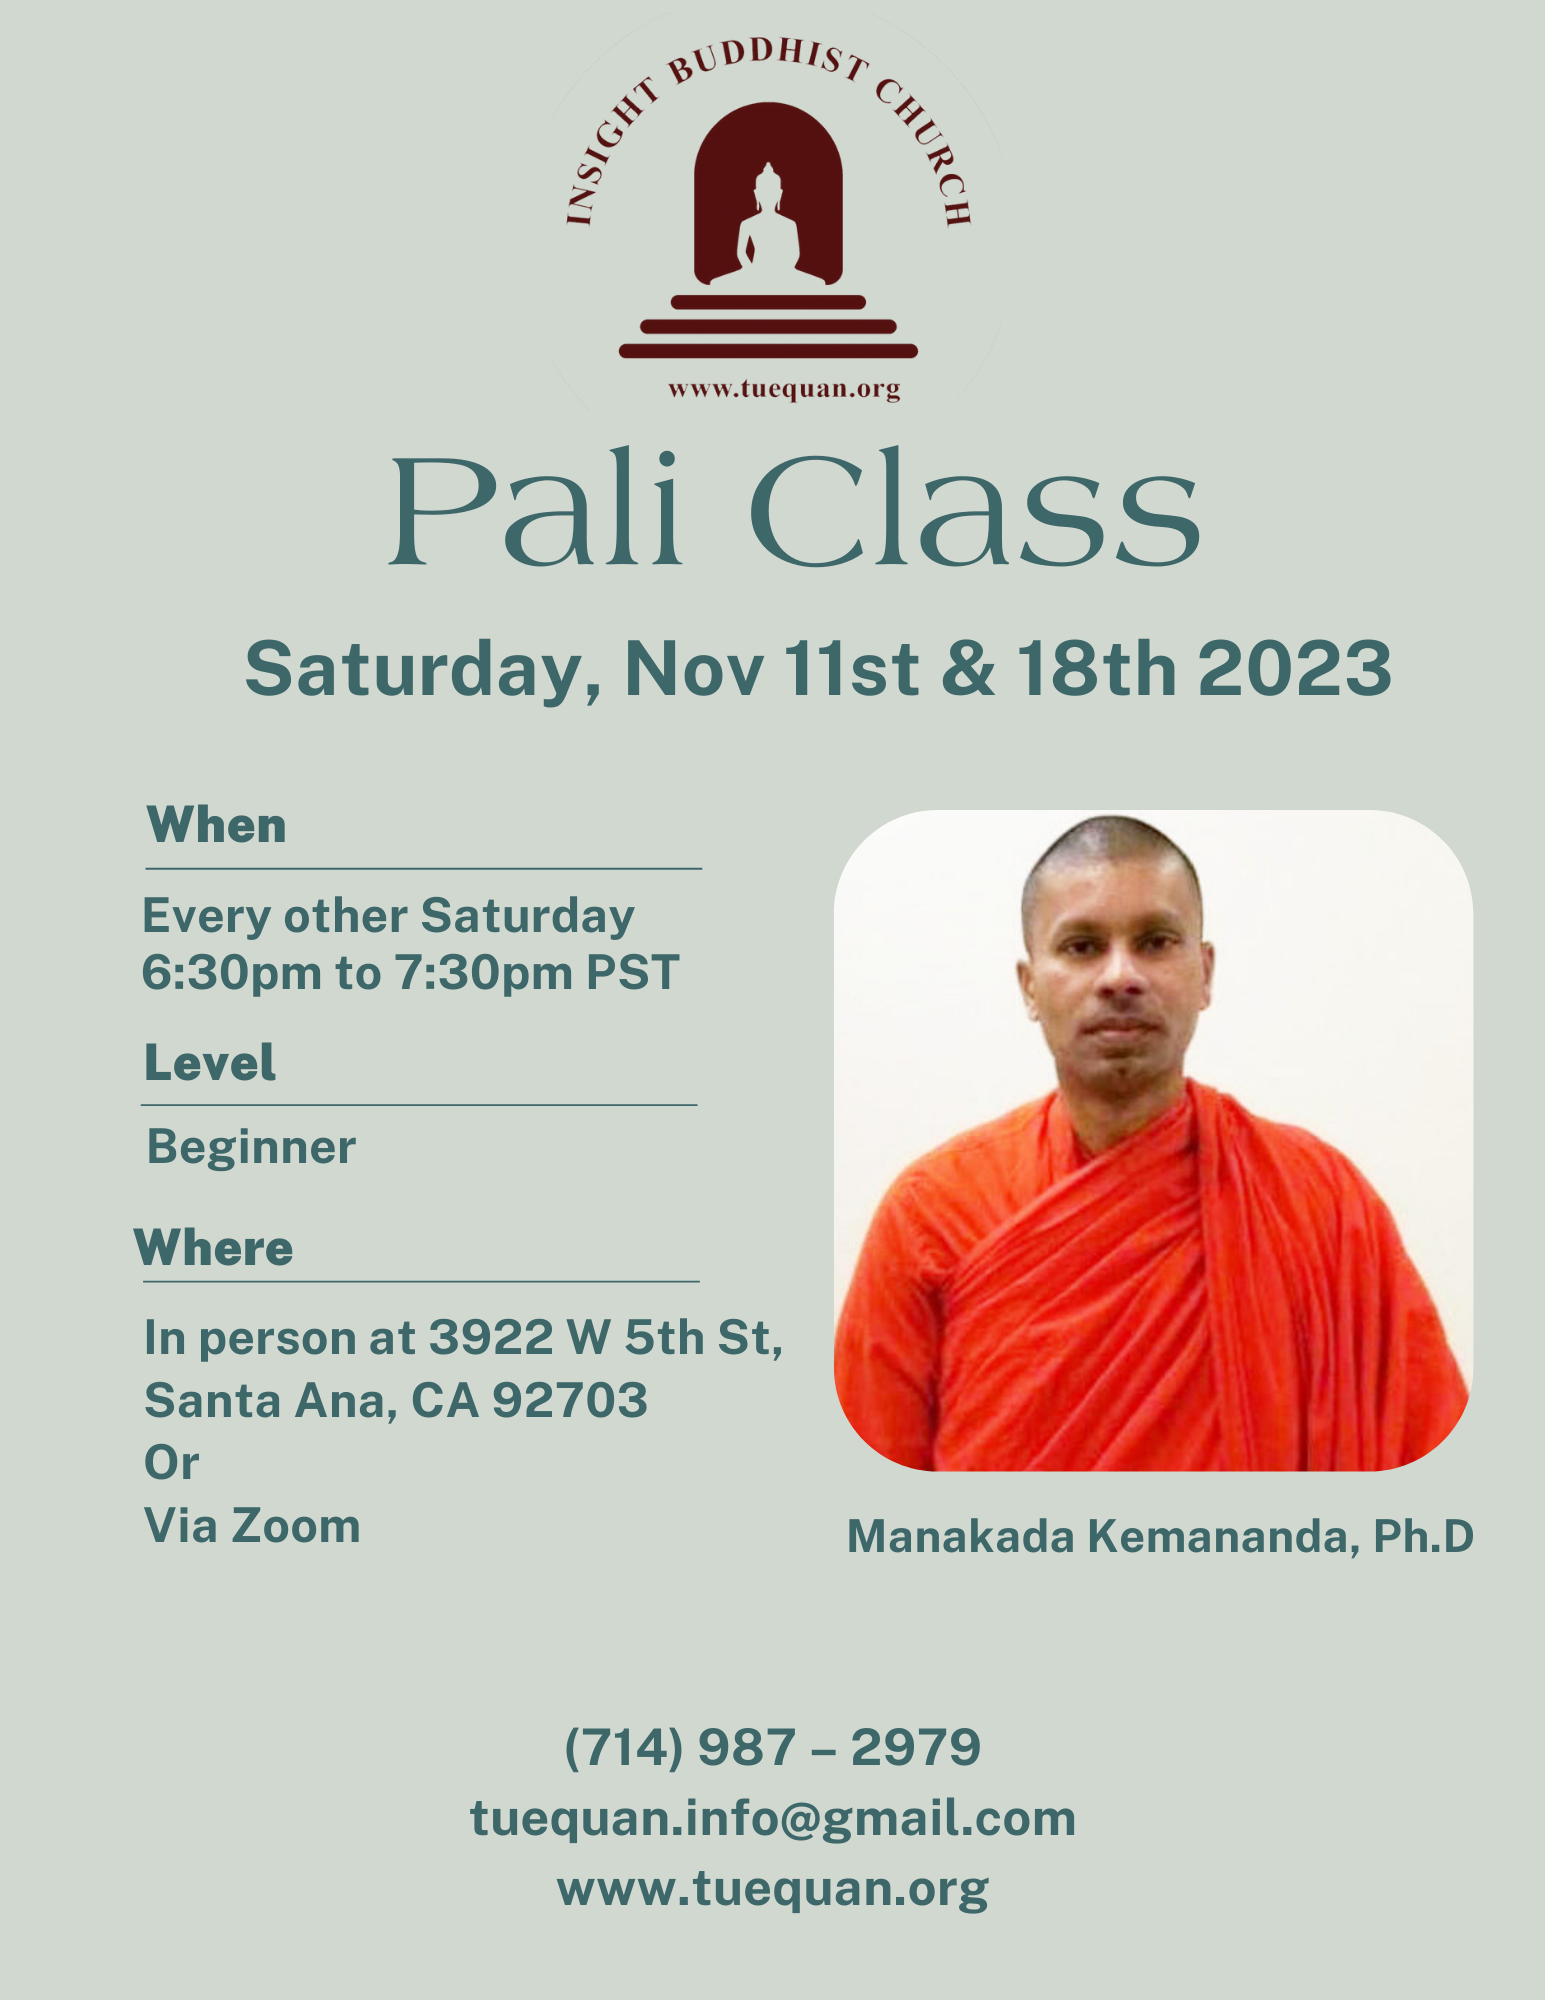 Pali class, Nov 11st & 18th,2023